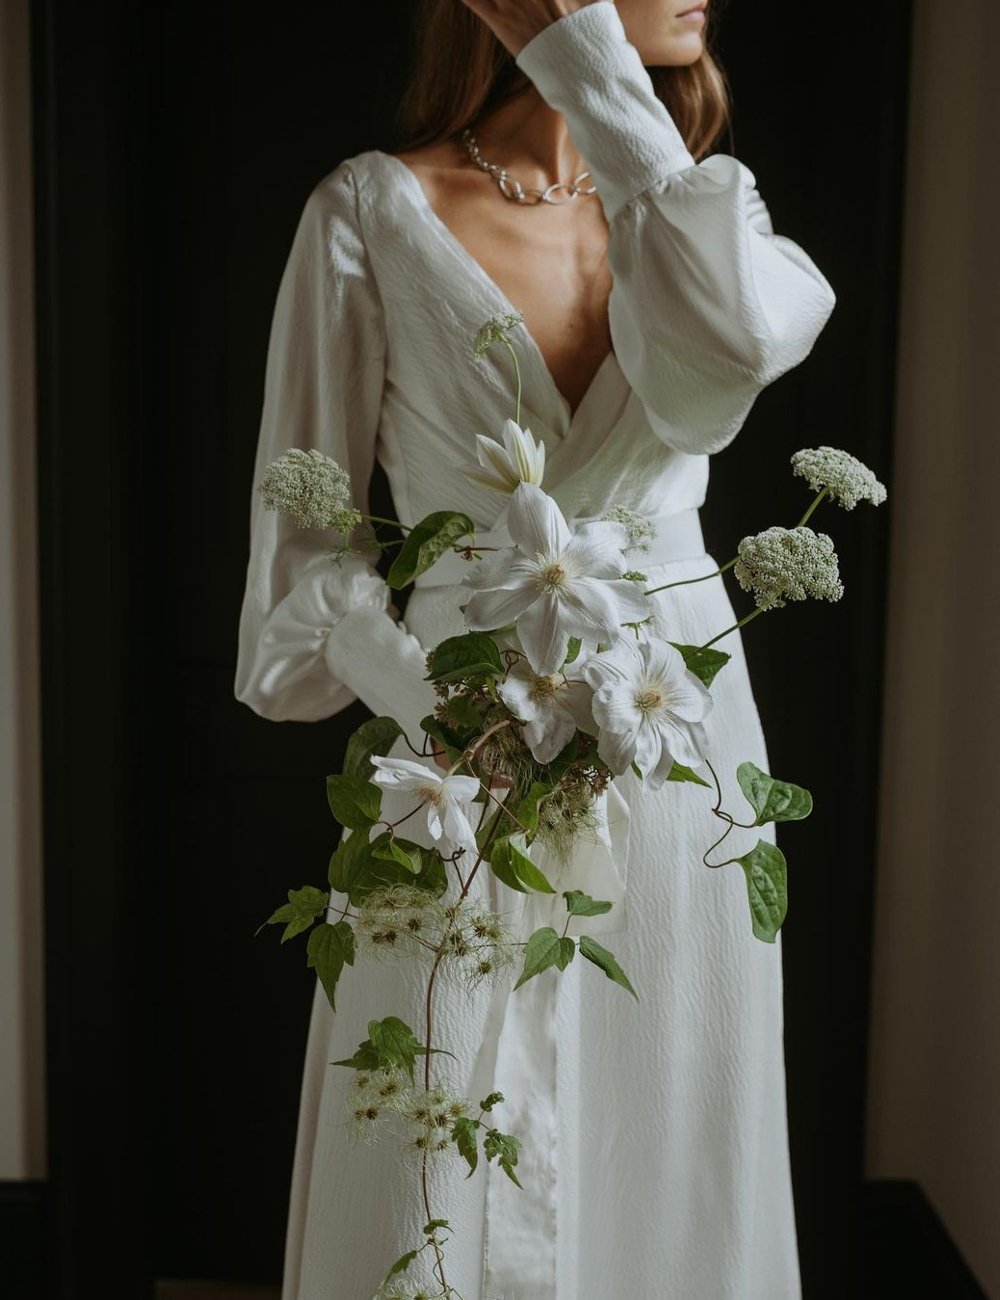 Jordana Masi - flores - buquê de noiva branco - casamento - noiva - https://stealthelook.com.br